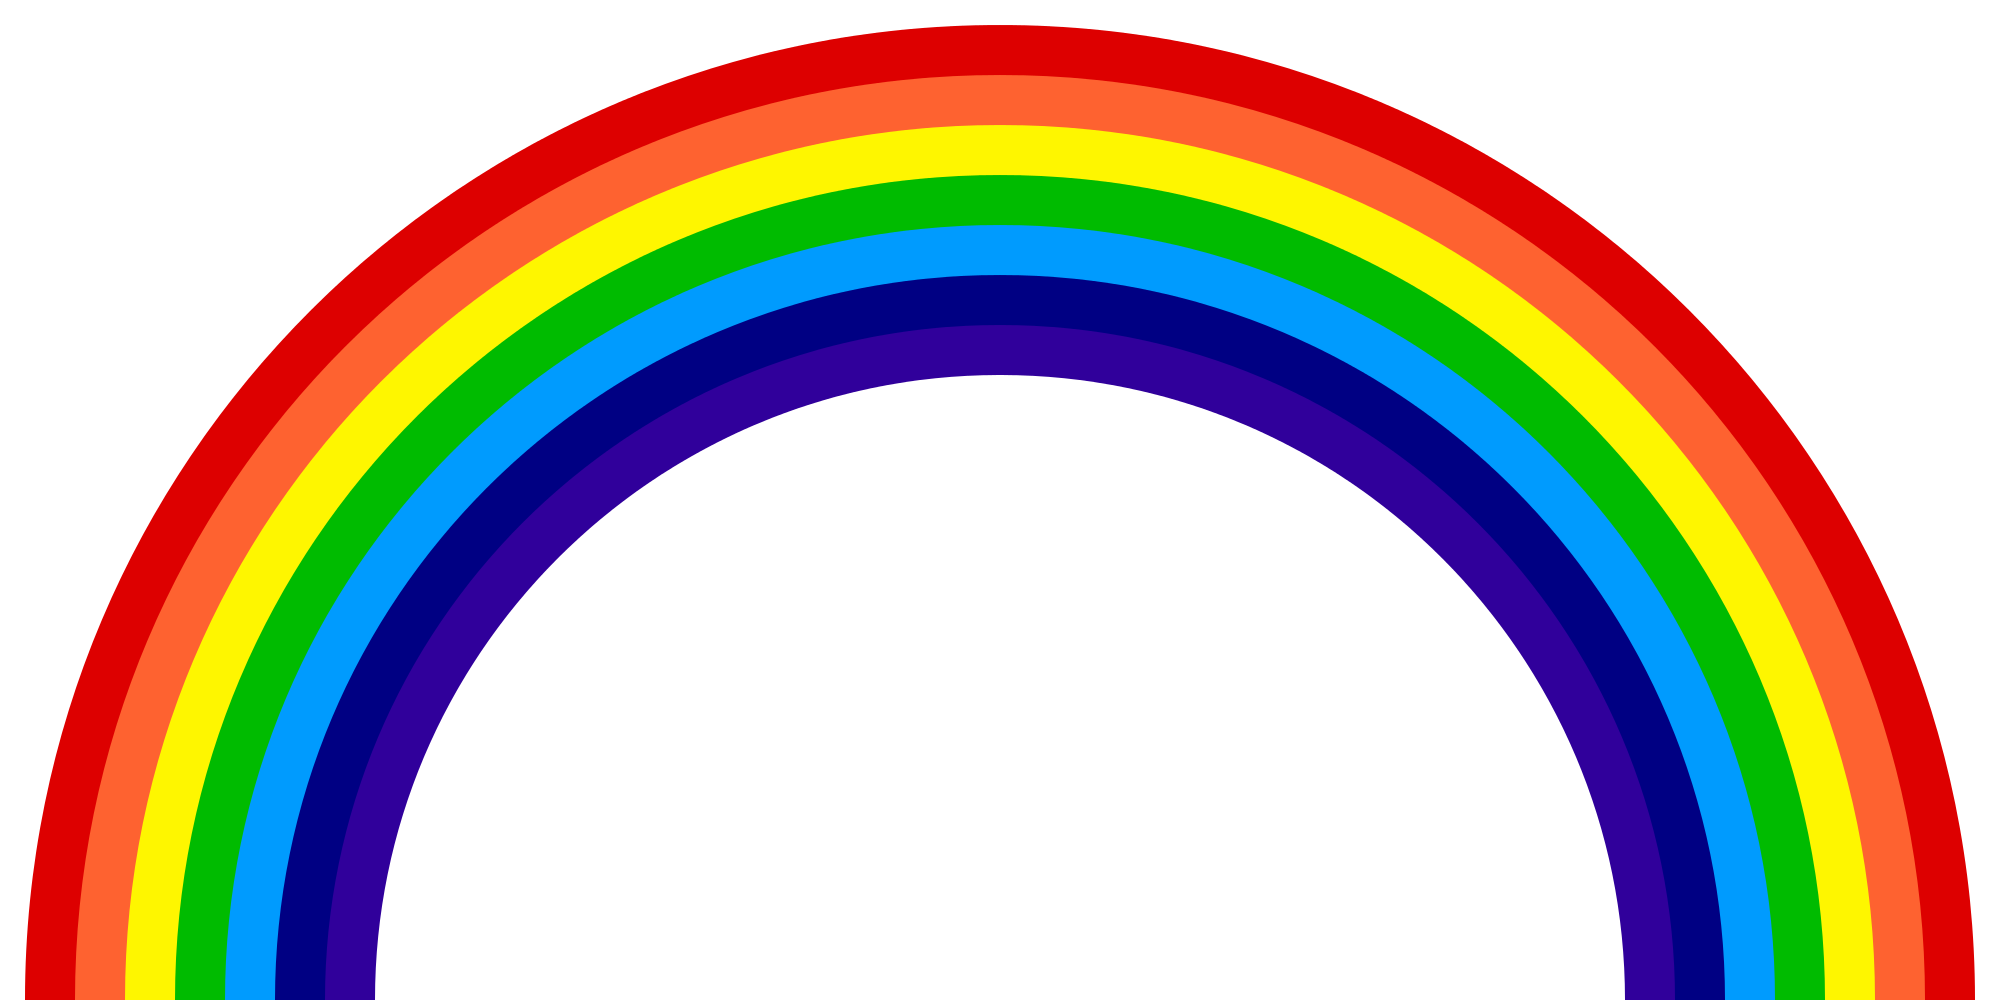 Rainbow svg, Download Rainbow svg for free 2019